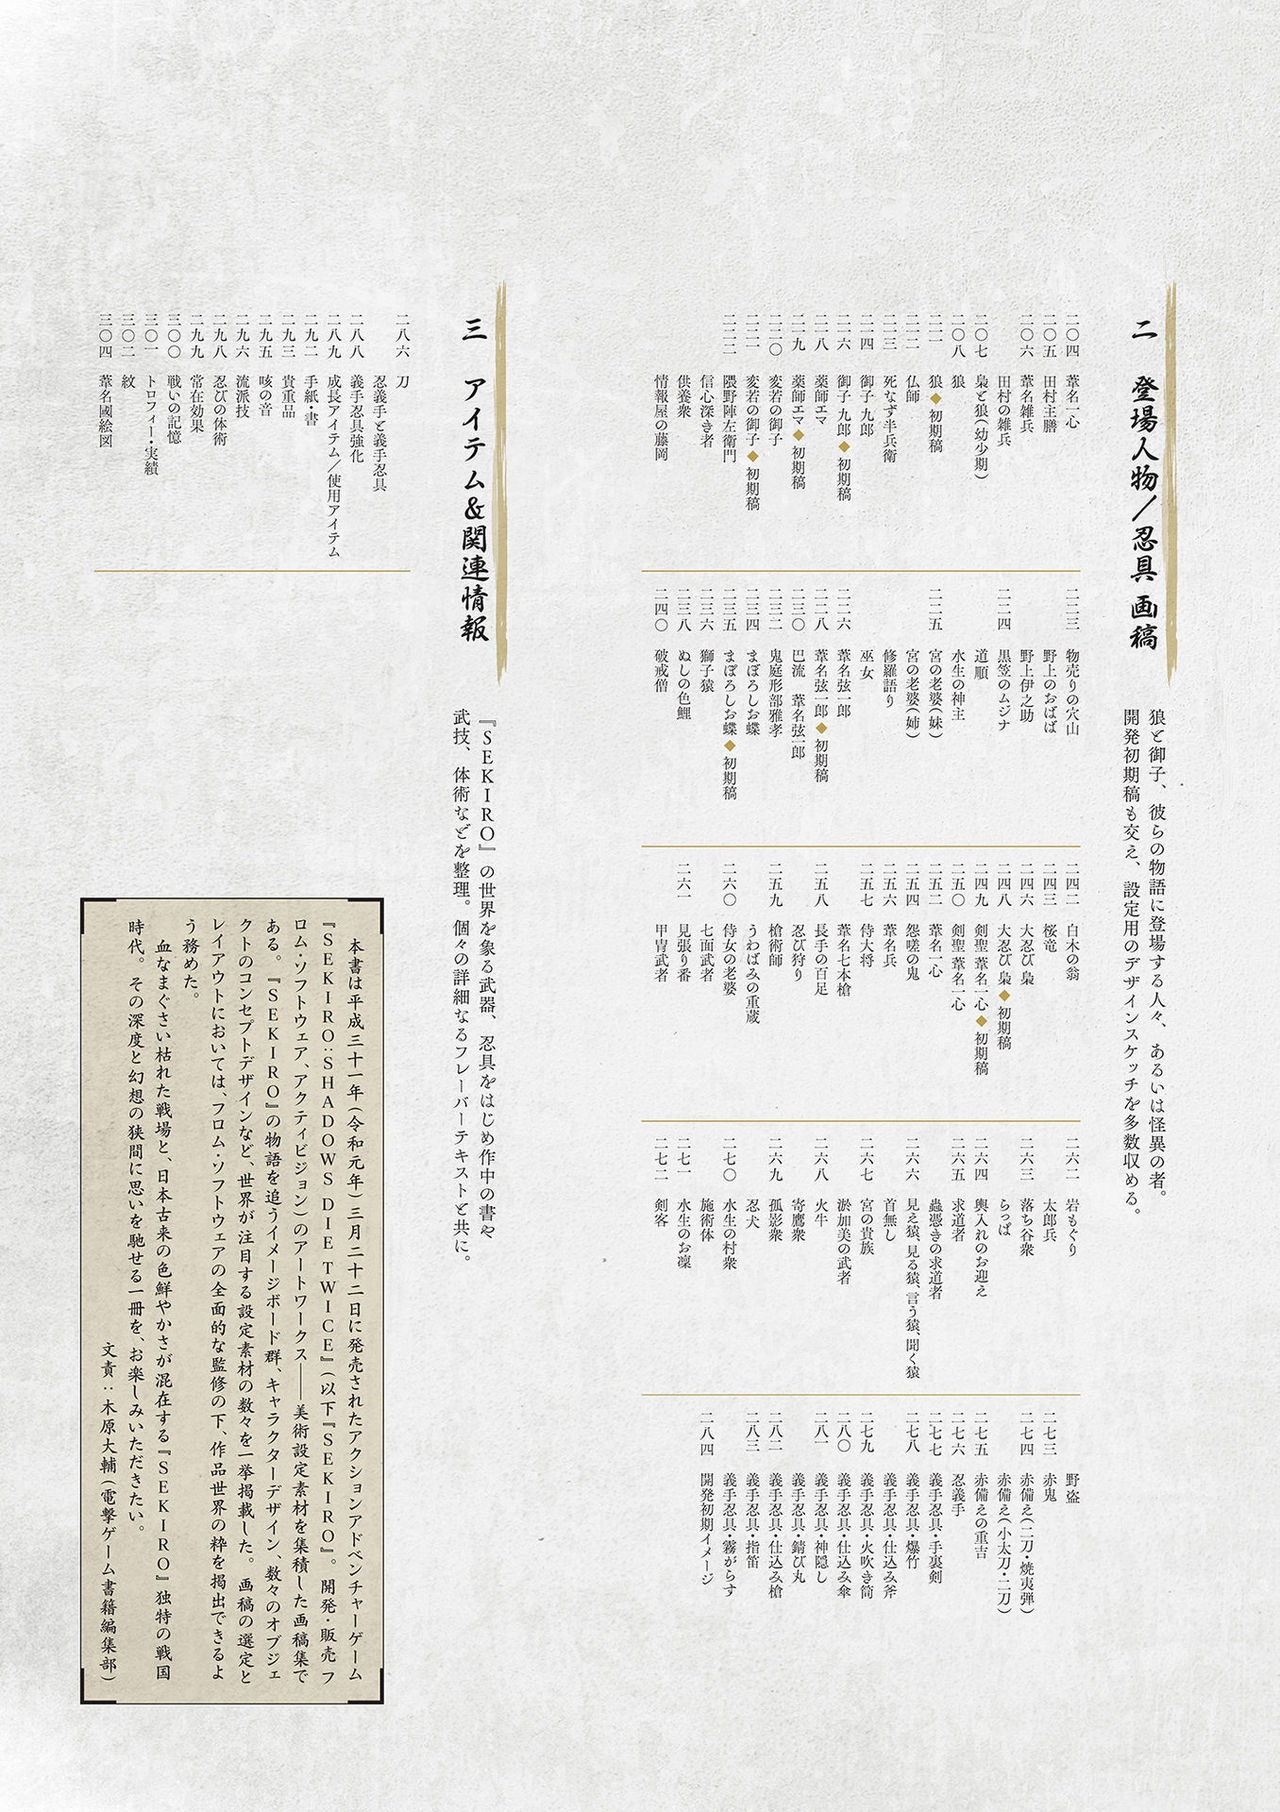 SEKIRO - SHADOWS DIE TWICE Official Artworks 5